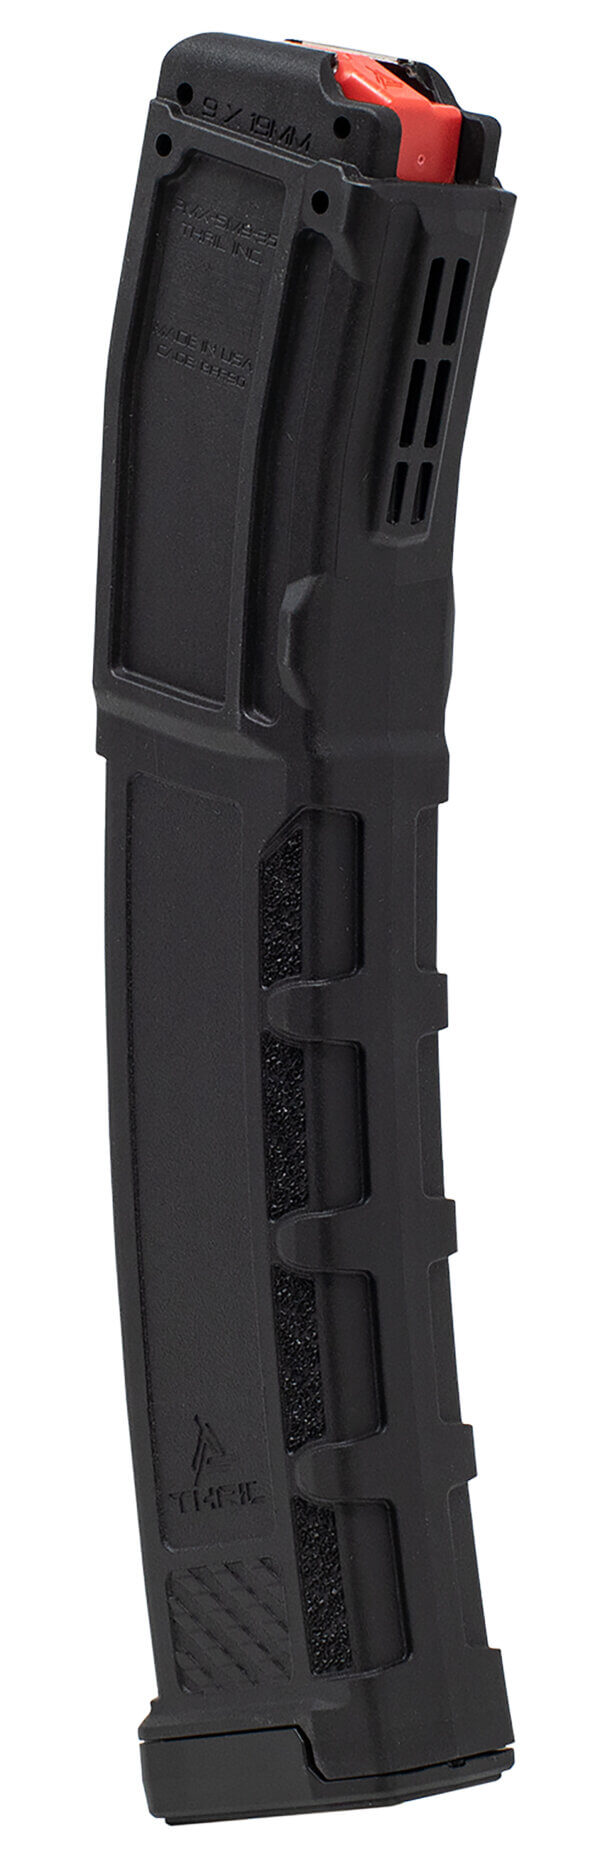 EAA GIRSAN 390223 Regard 10rd 9mm Luger Fits Girsan Regard Black Steel